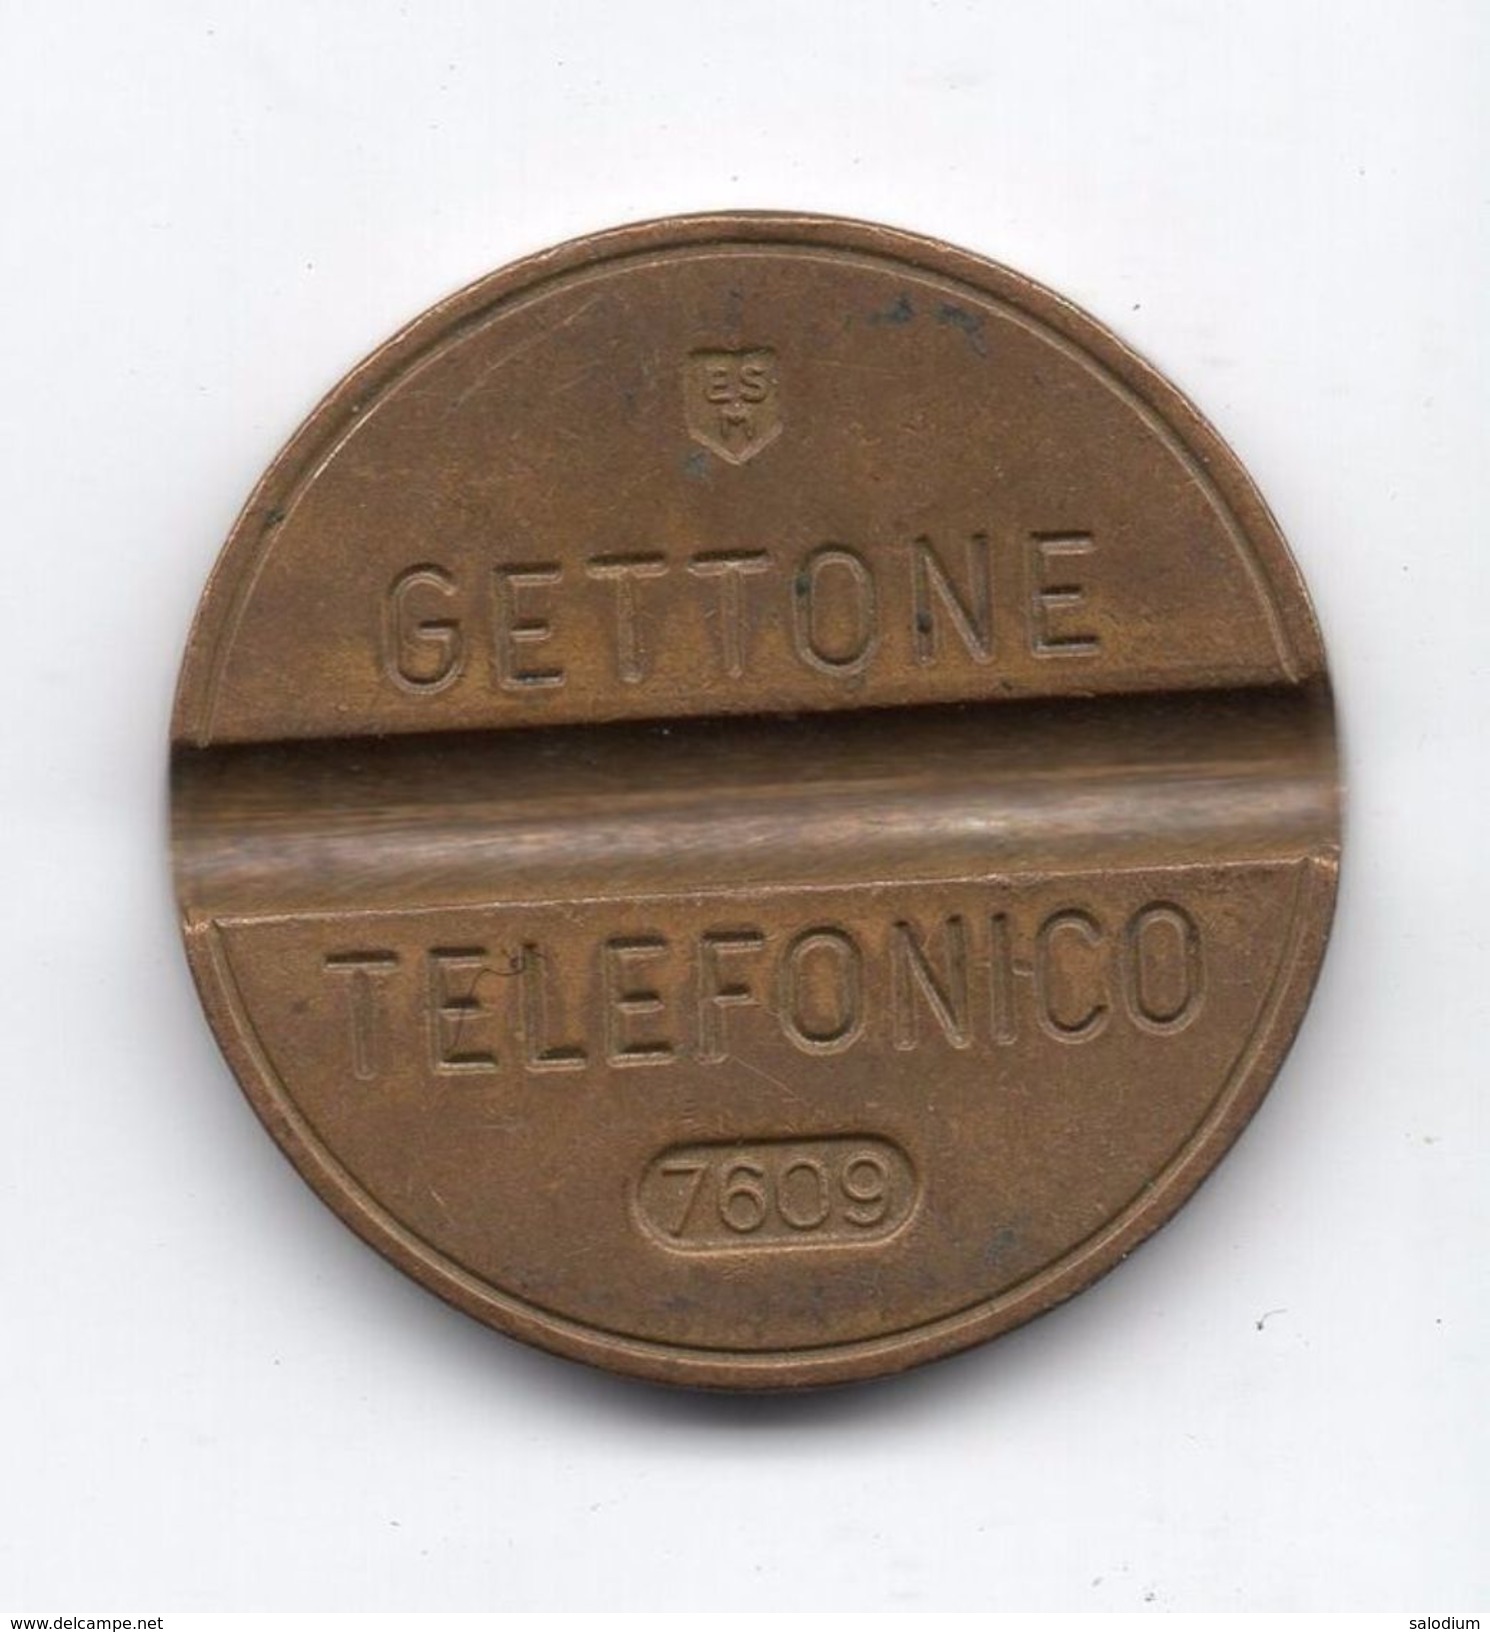 Gettone Telefonico 7609 Token Telephone - (Id-805) - Firma's